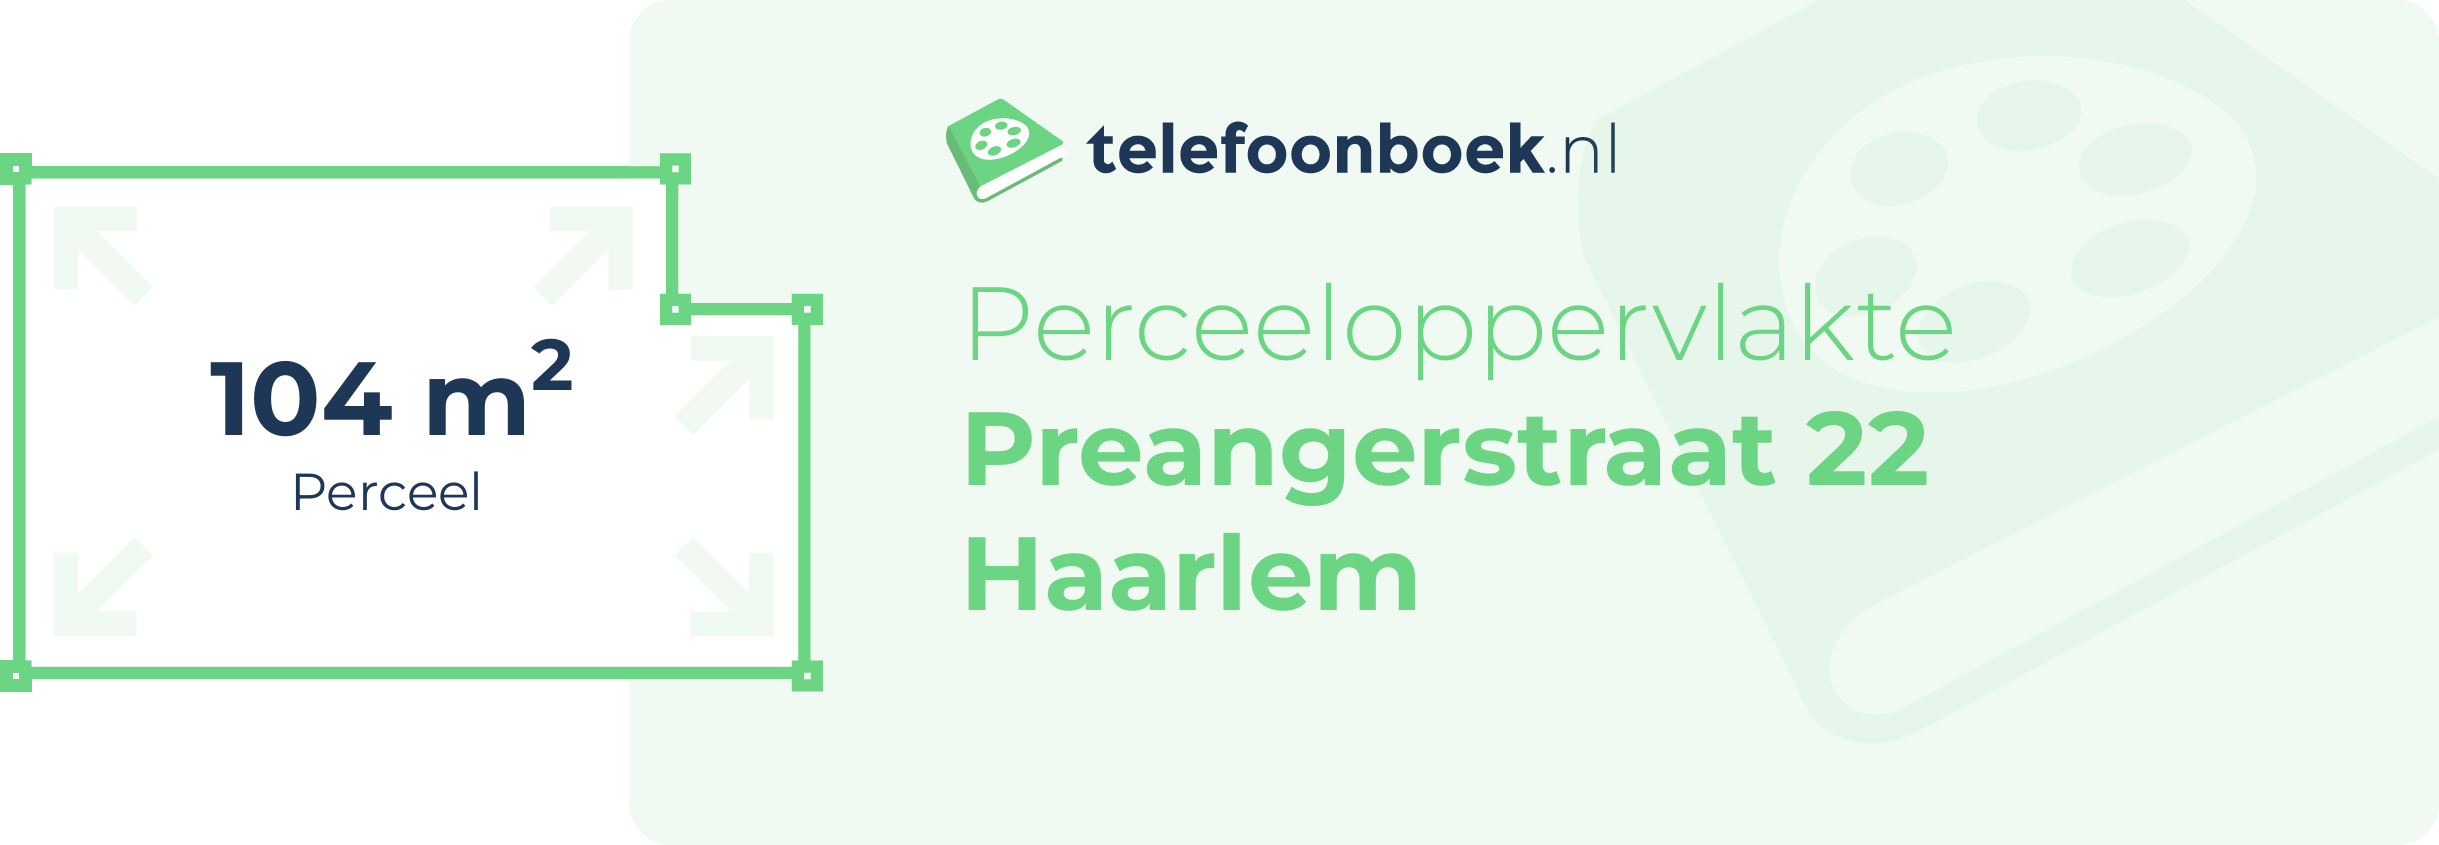 Perceeloppervlakte Preangerstraat 22 Haarlem